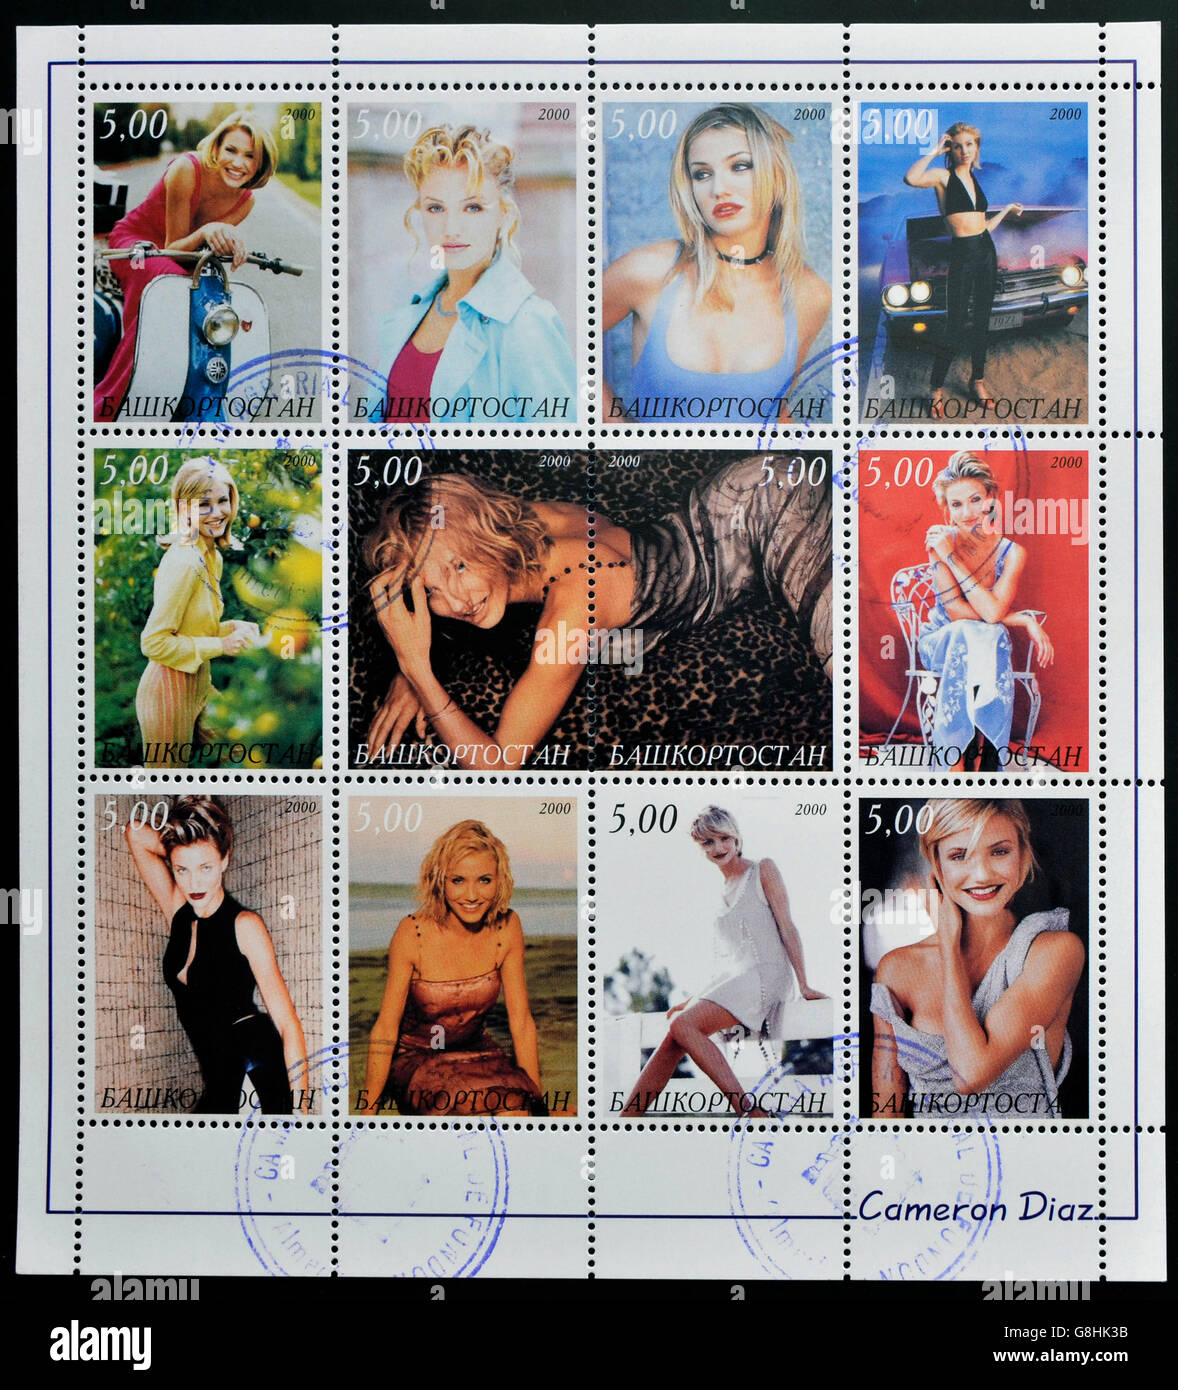 BASHKORTOSTAN- CIRCA 2000: A collection of  stamps printed in Bashkortostan Republic  showing pictures of Actress Cameron Diaz p Stock Photo